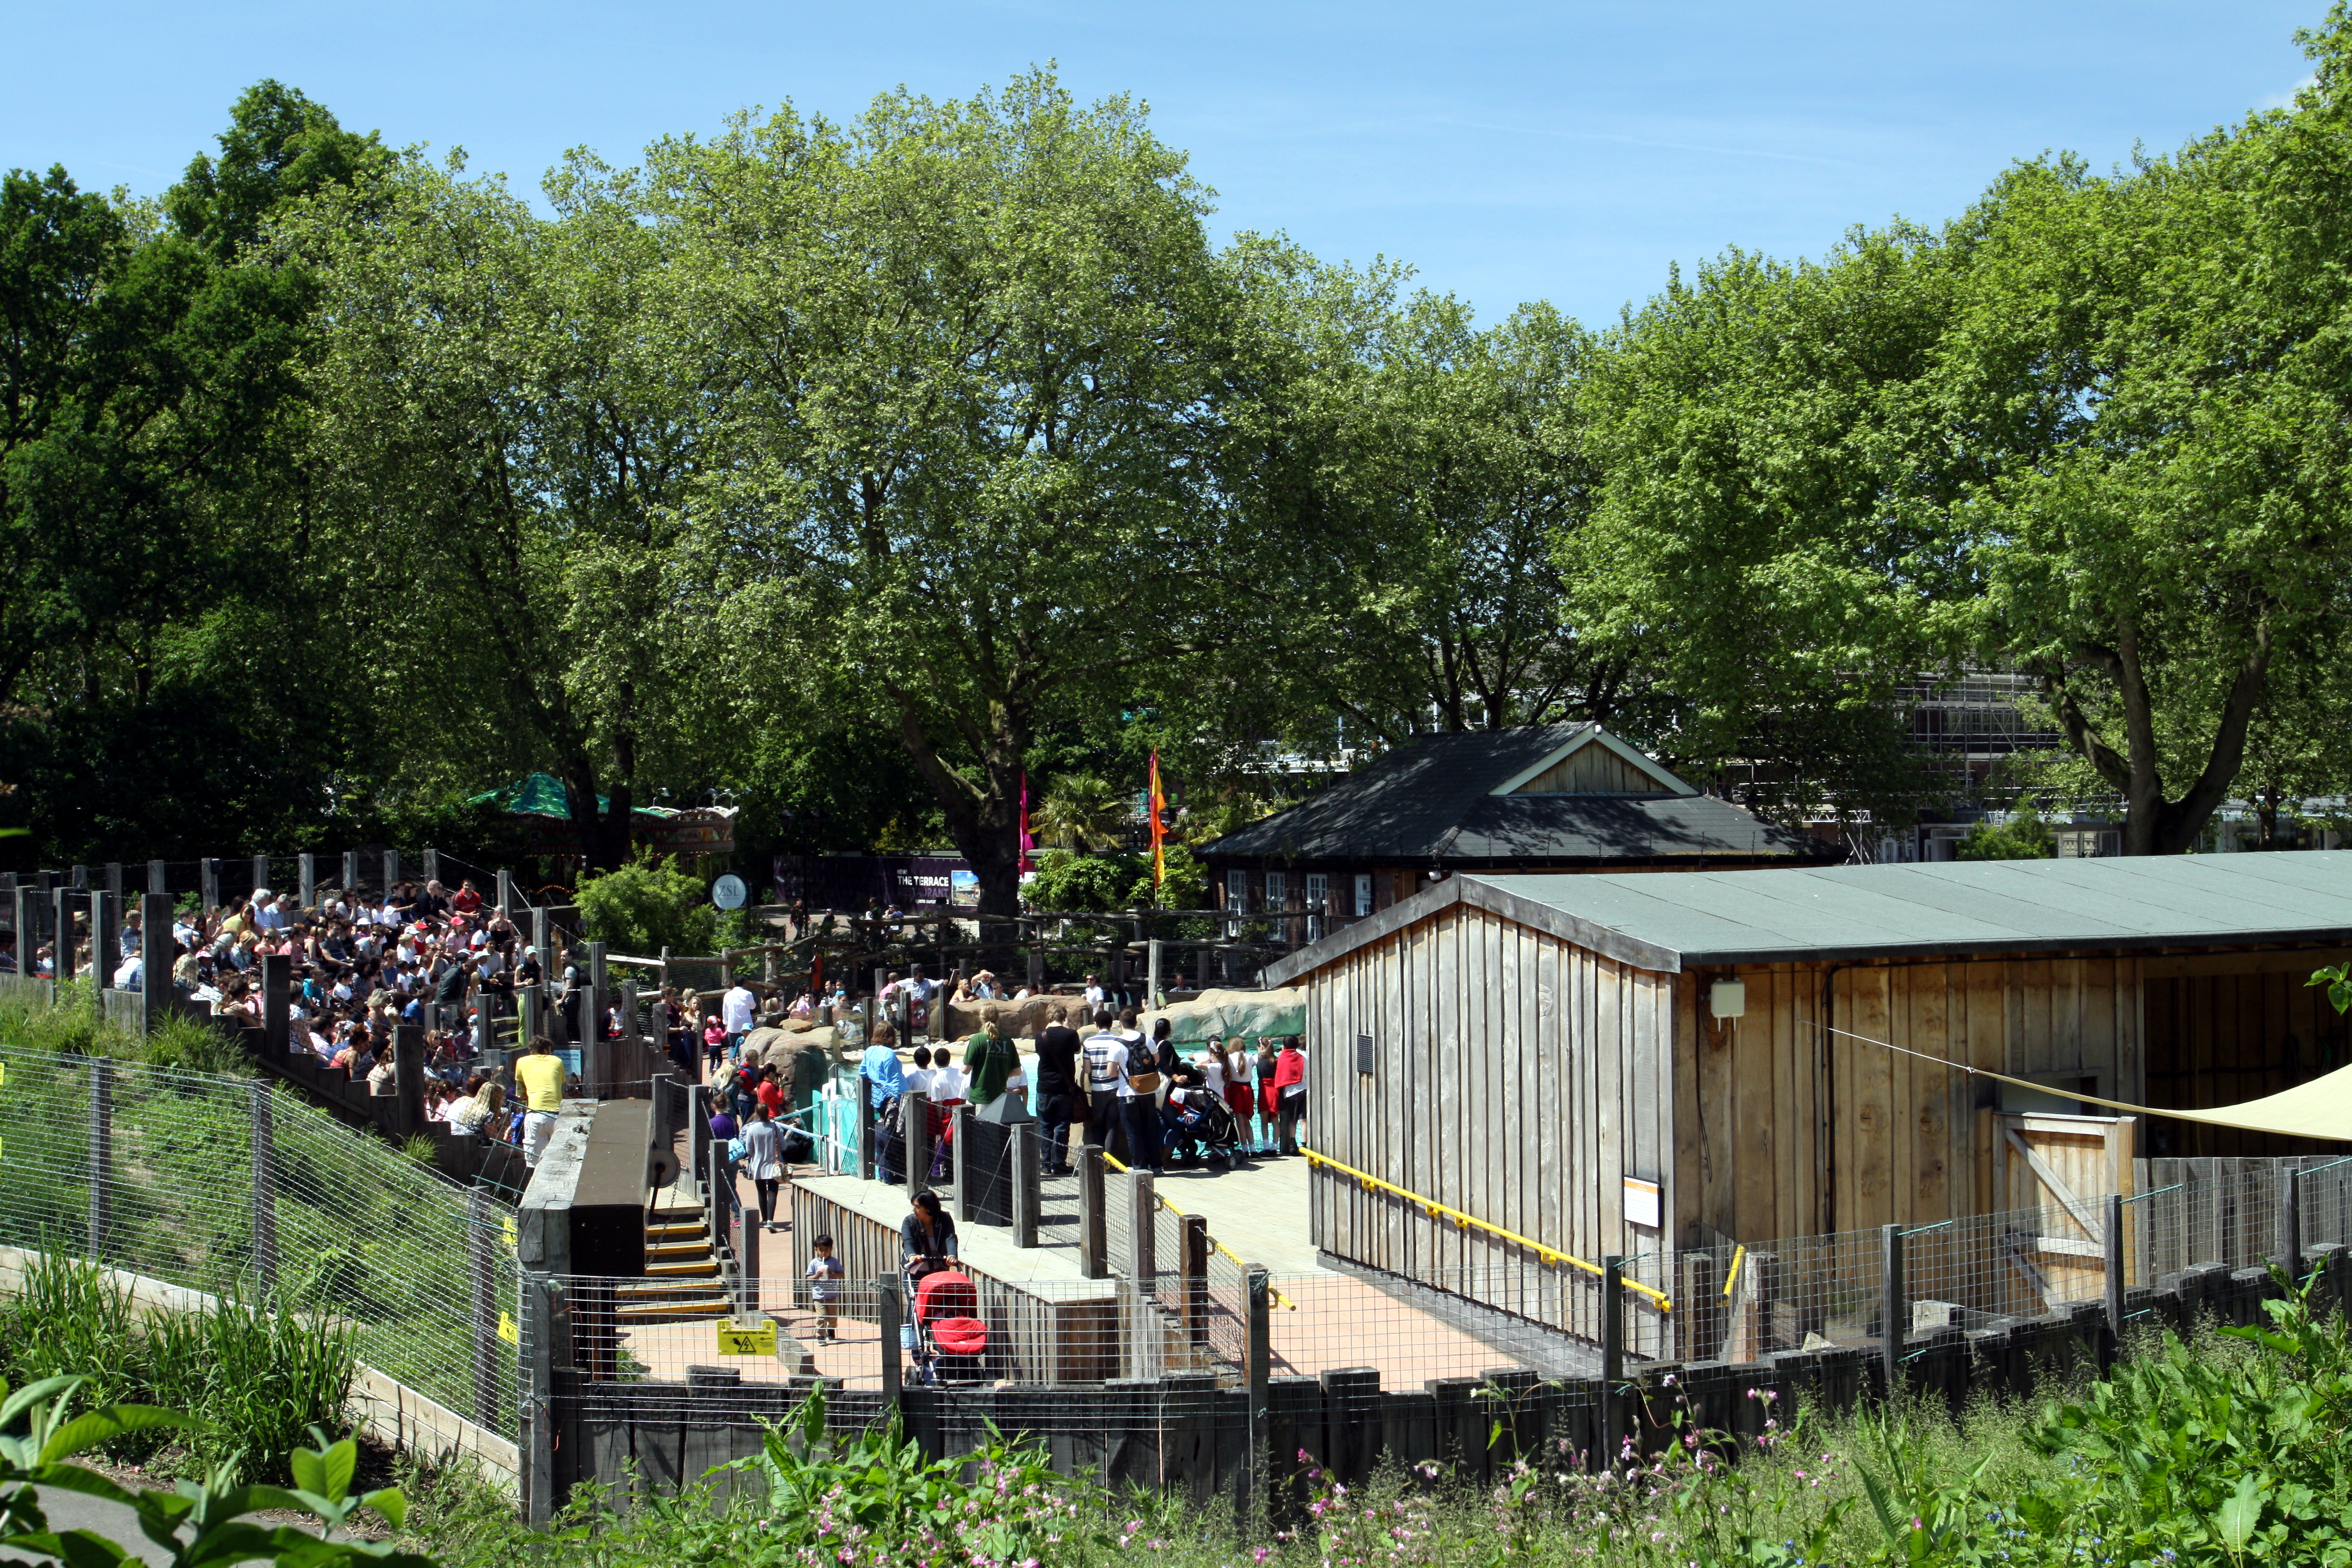 File:ZSL London Zoo in the Regent's Park in London, June 2013.jpg